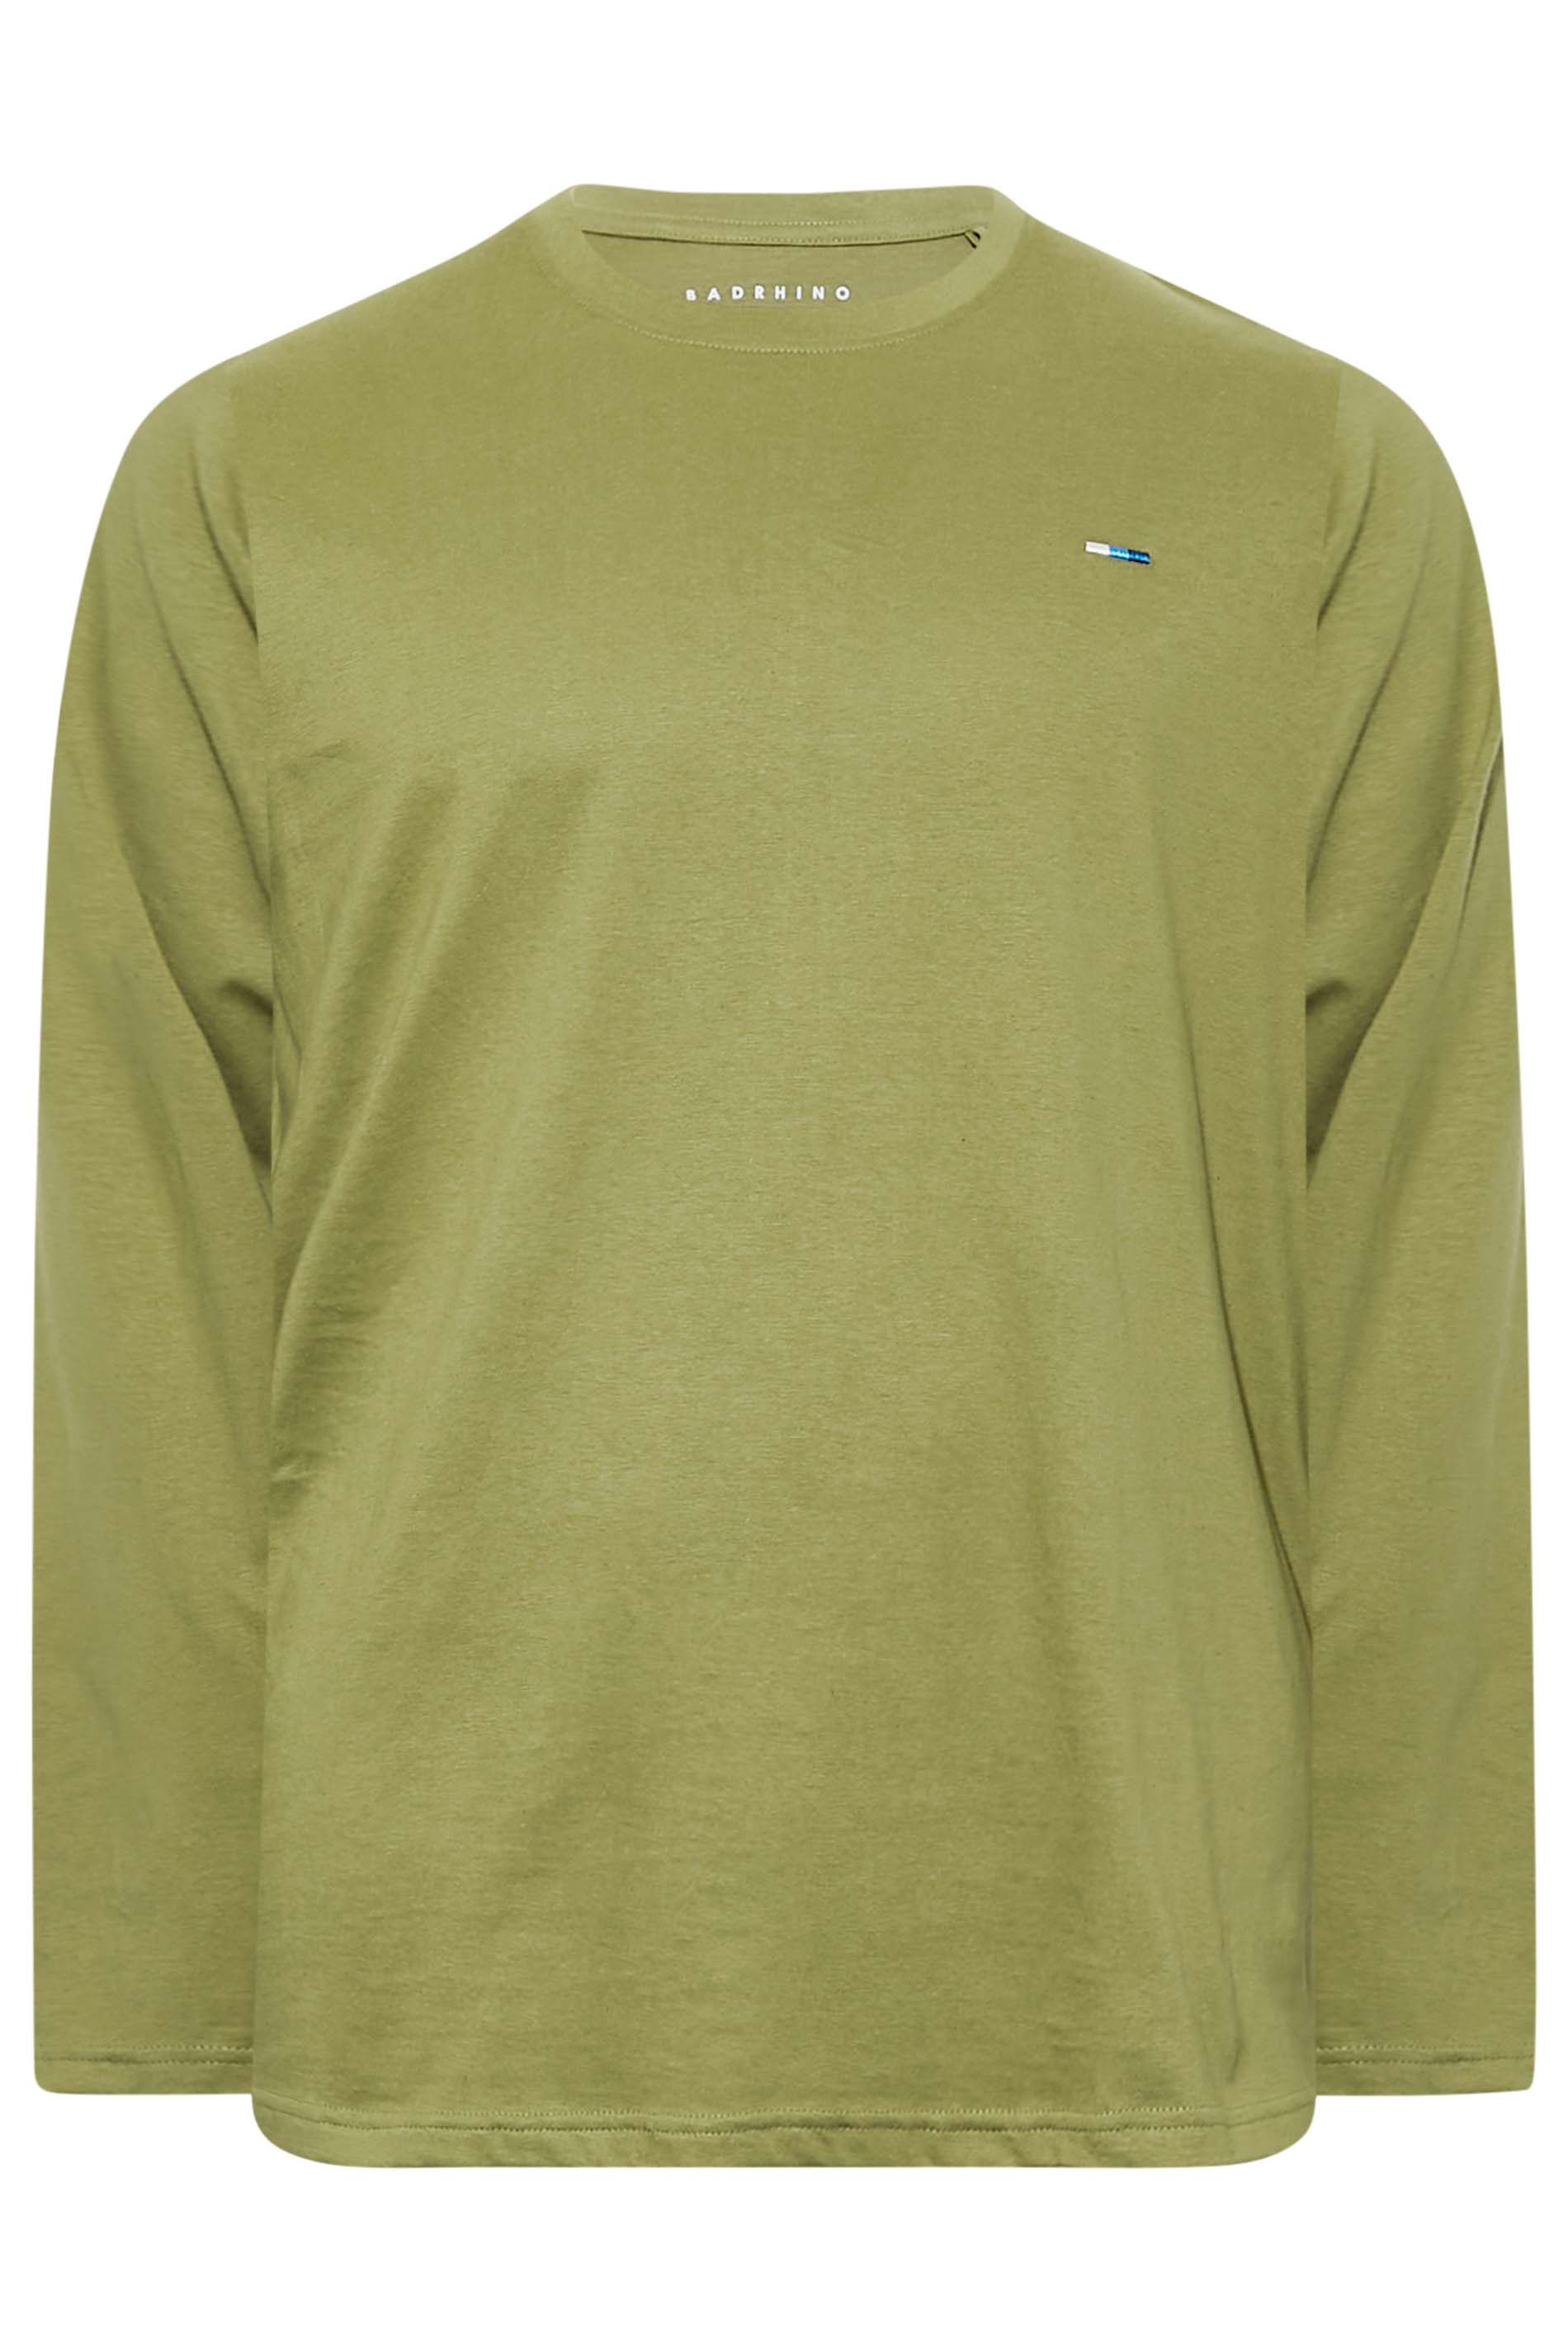 Big & Tall Sage Green Long Sleeve Plain T-shirt | BadRhino 3